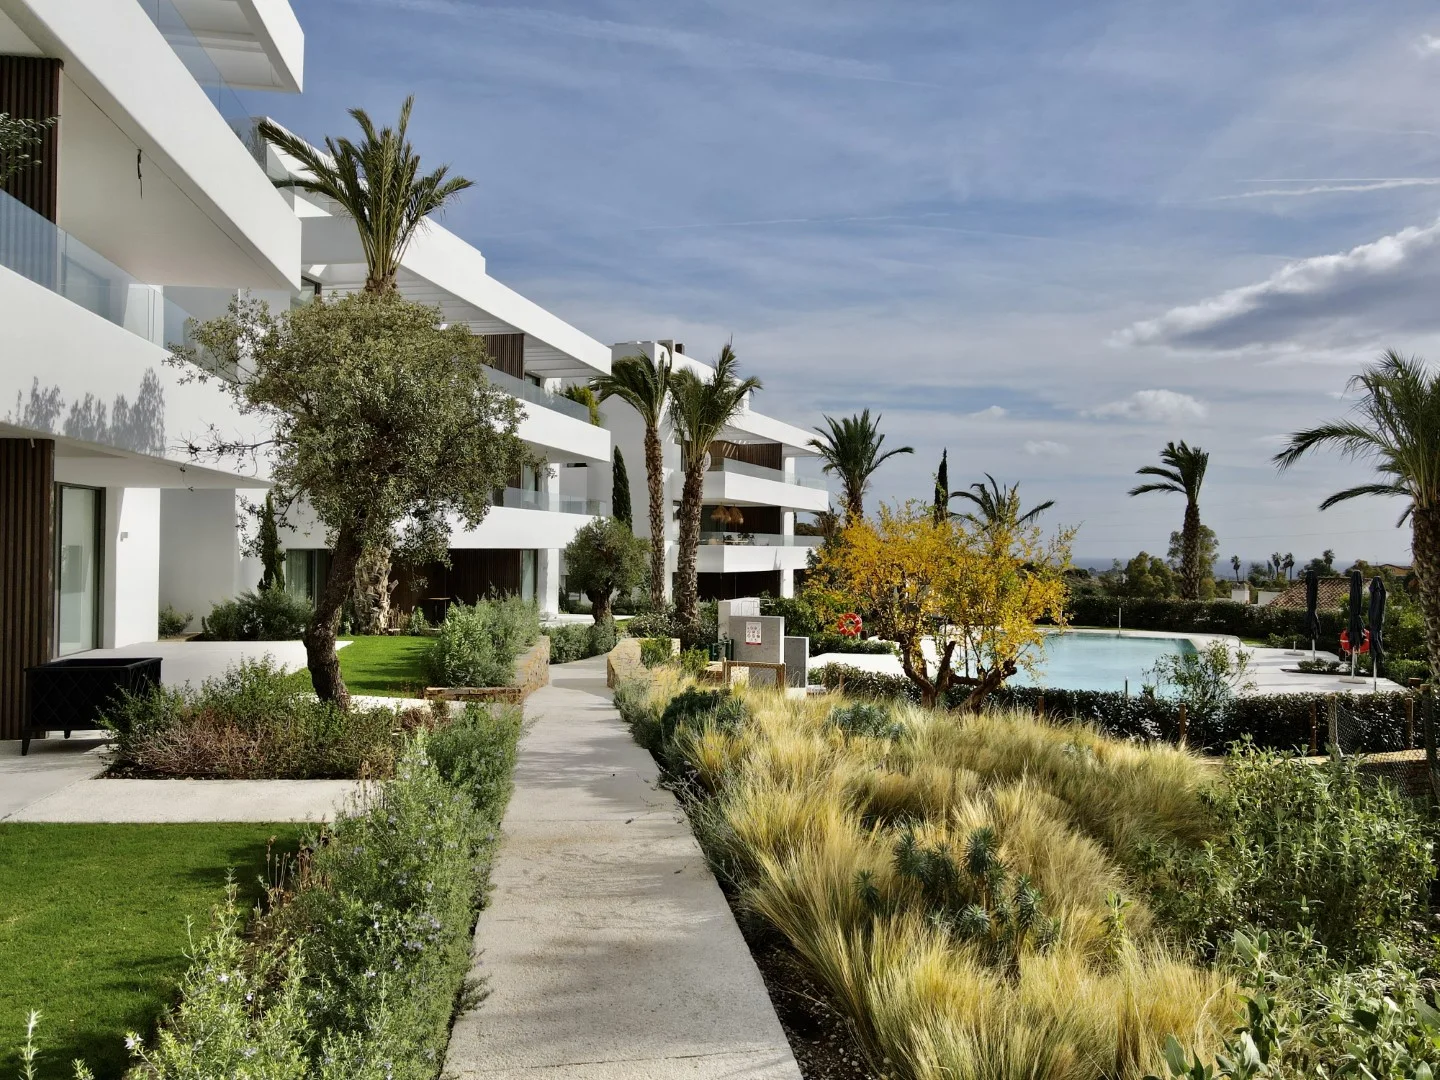 La Alqueria: New apartment with sea views next to golf